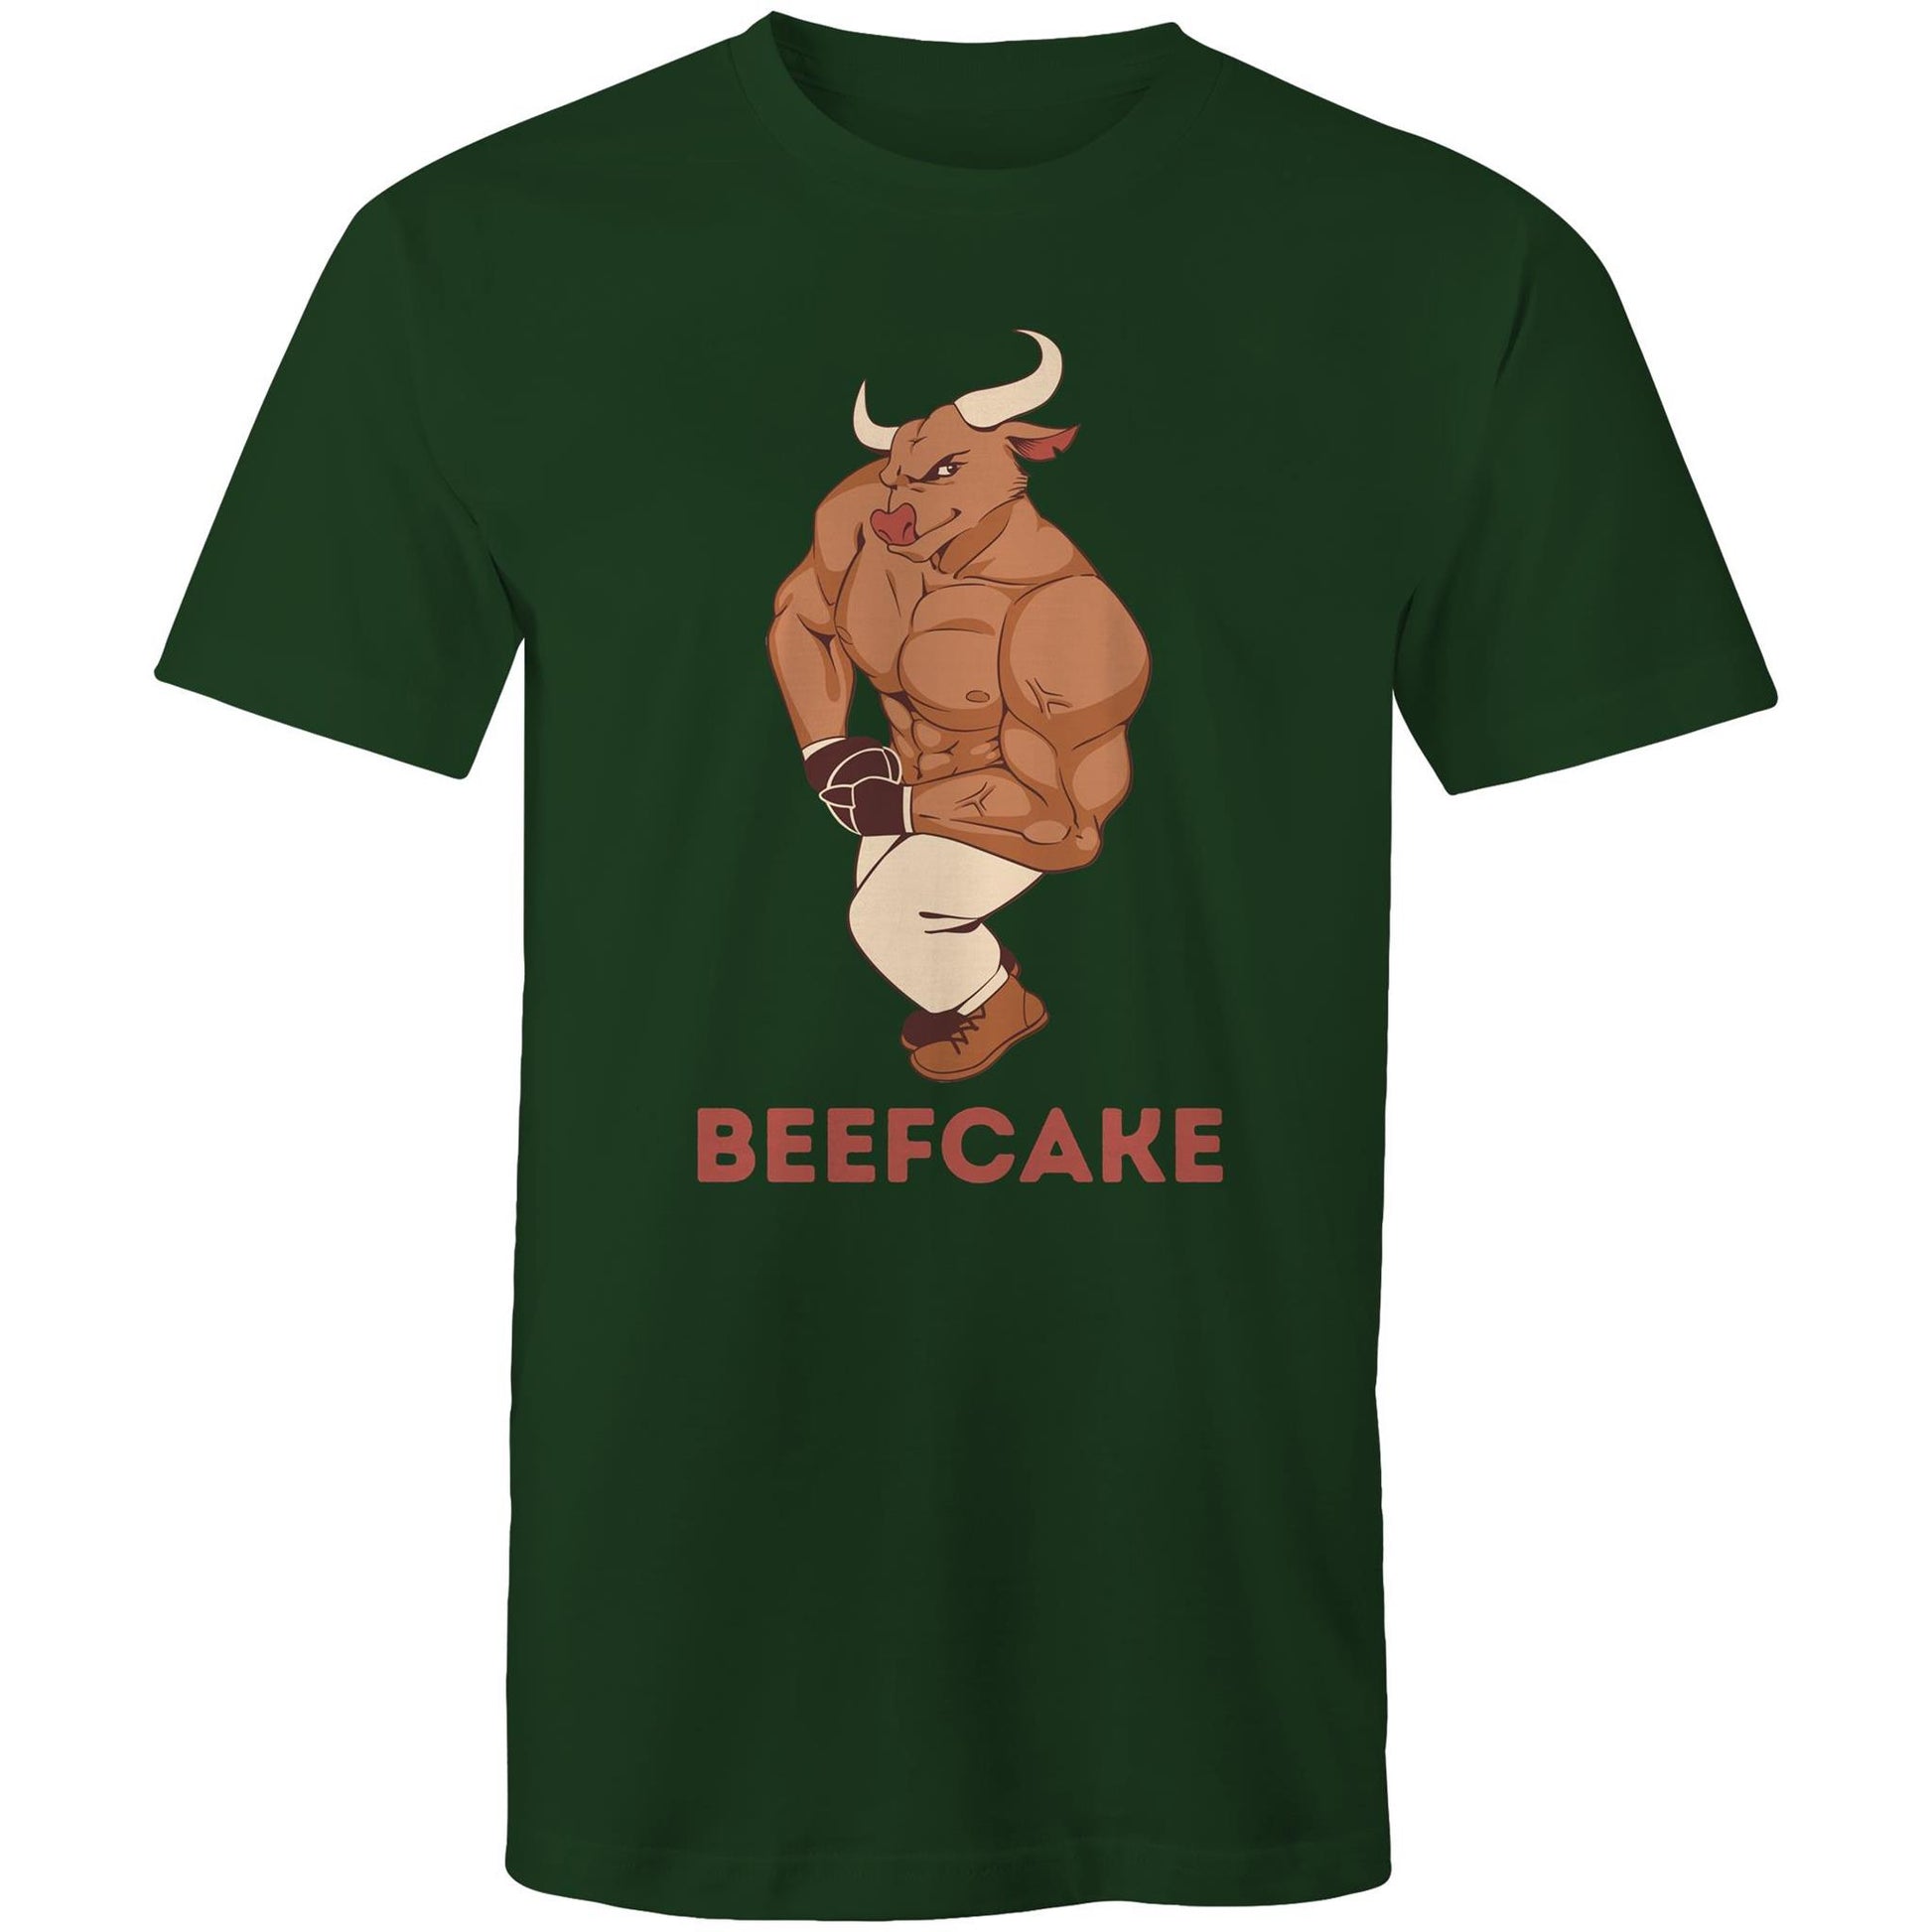 Beefcake, Bull, Gym - Mens T-Shirt Forest Green Fitness T-shirt Fitness